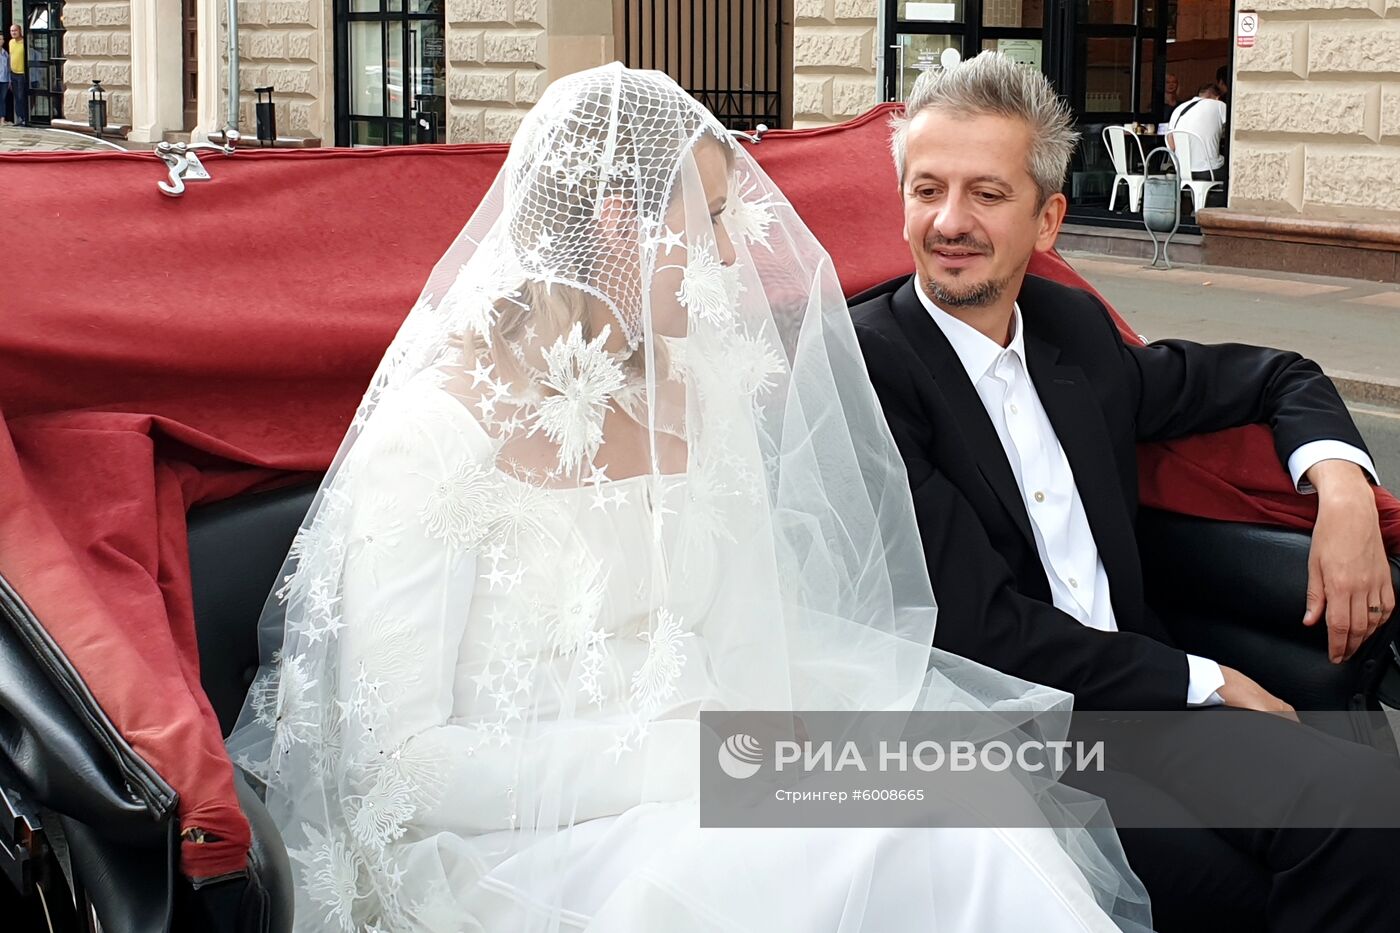 Свадьба К. Собчак и К. Богомолова